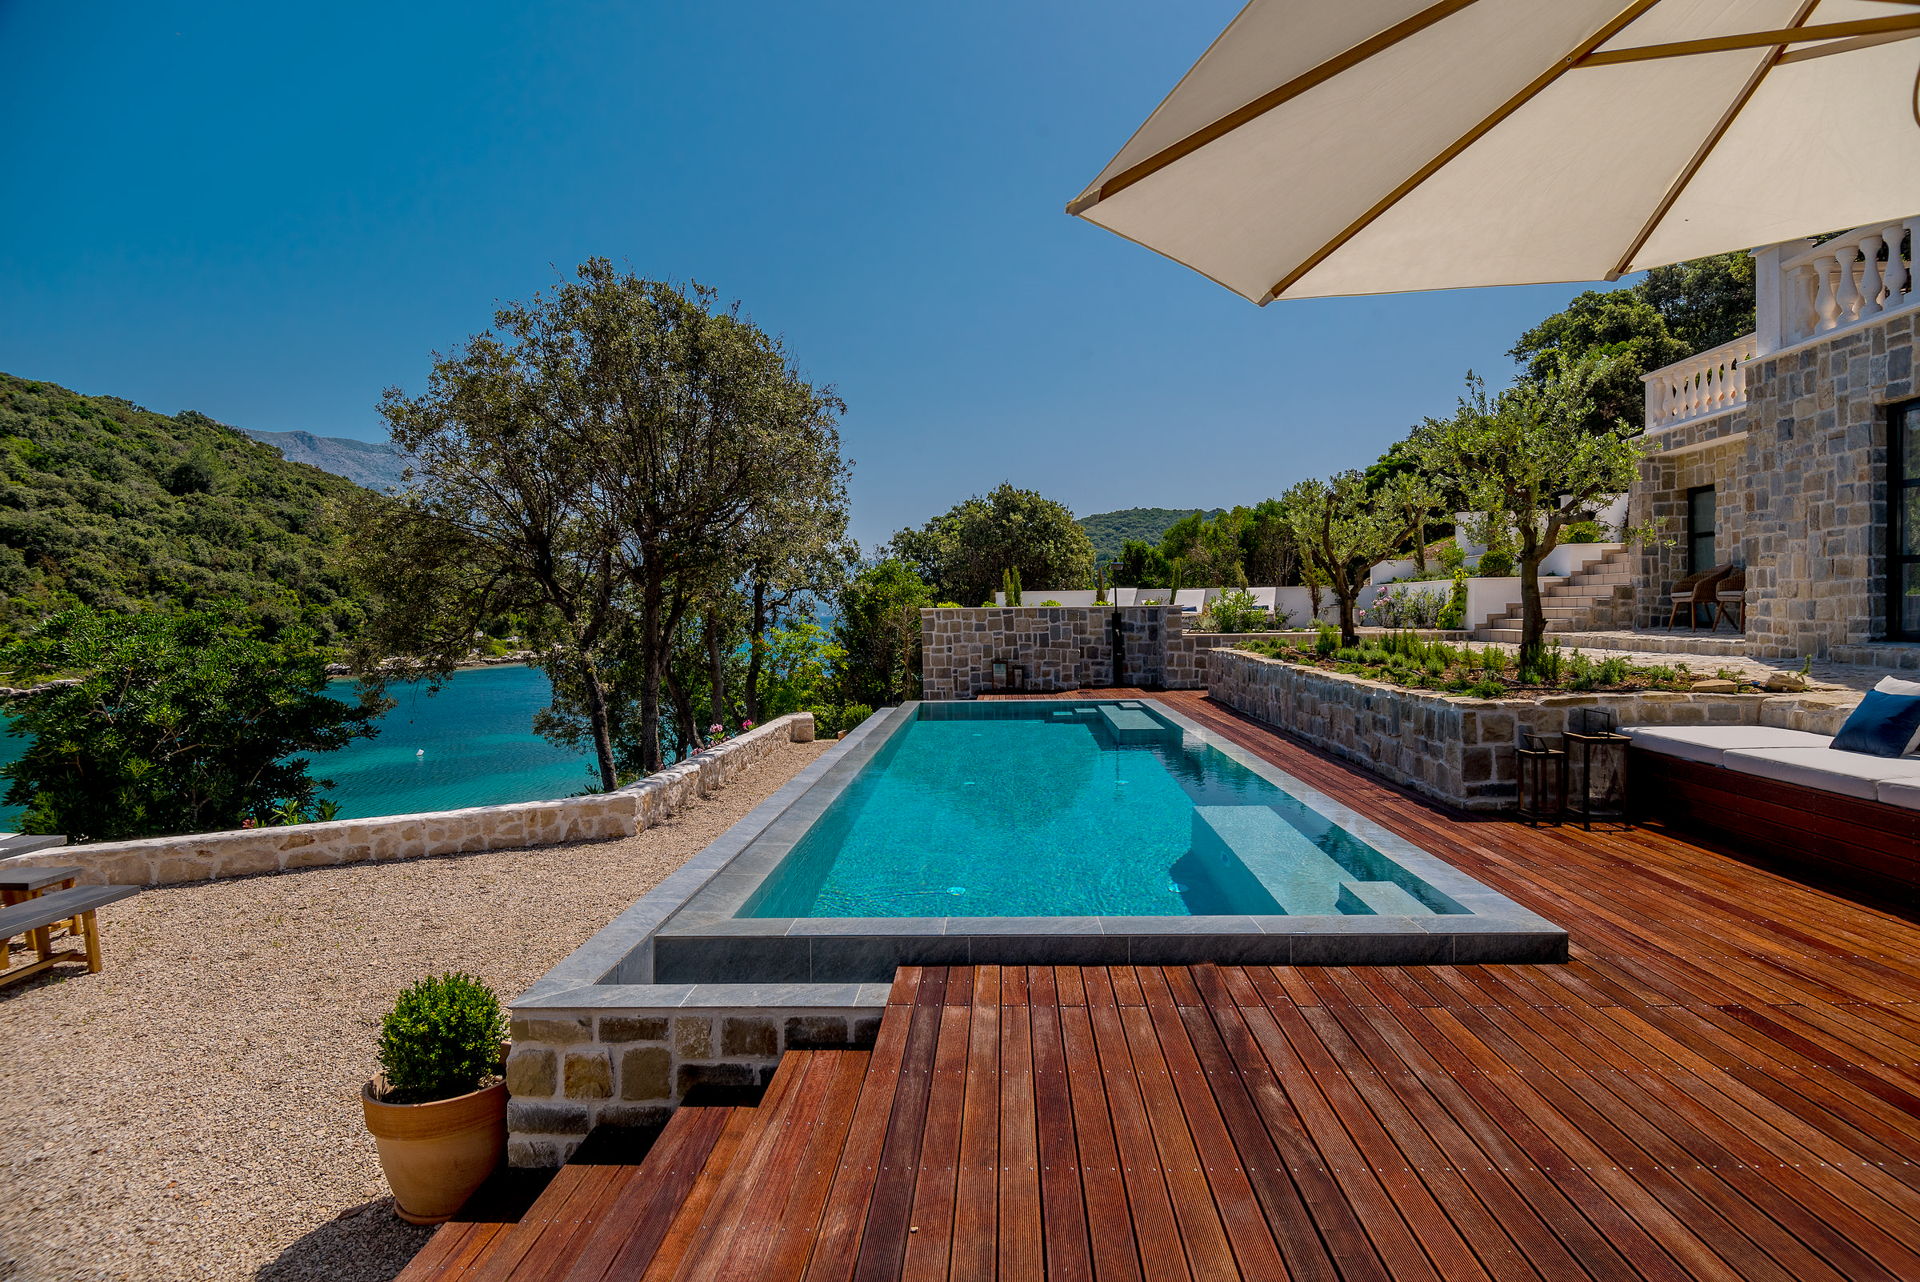 KORCULA LUXURY VILLAS - Luxury Villa Korcula Feodora with the pool and gym at the beach on Korcula island